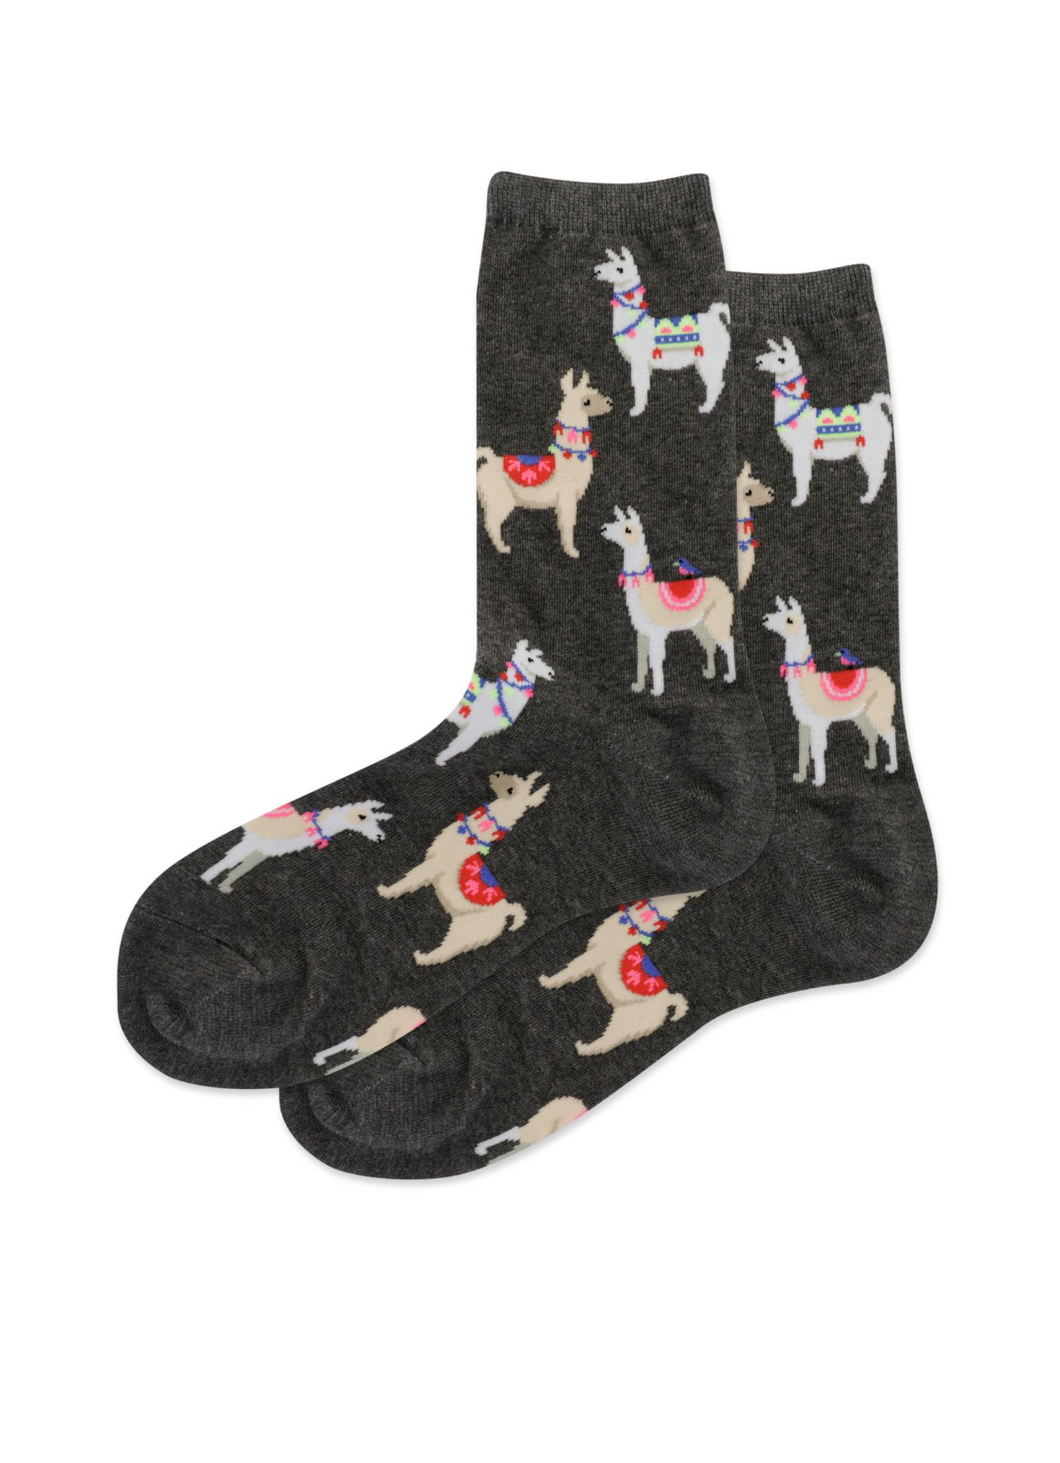 Alpaca Socks (Women’s) Farm animal